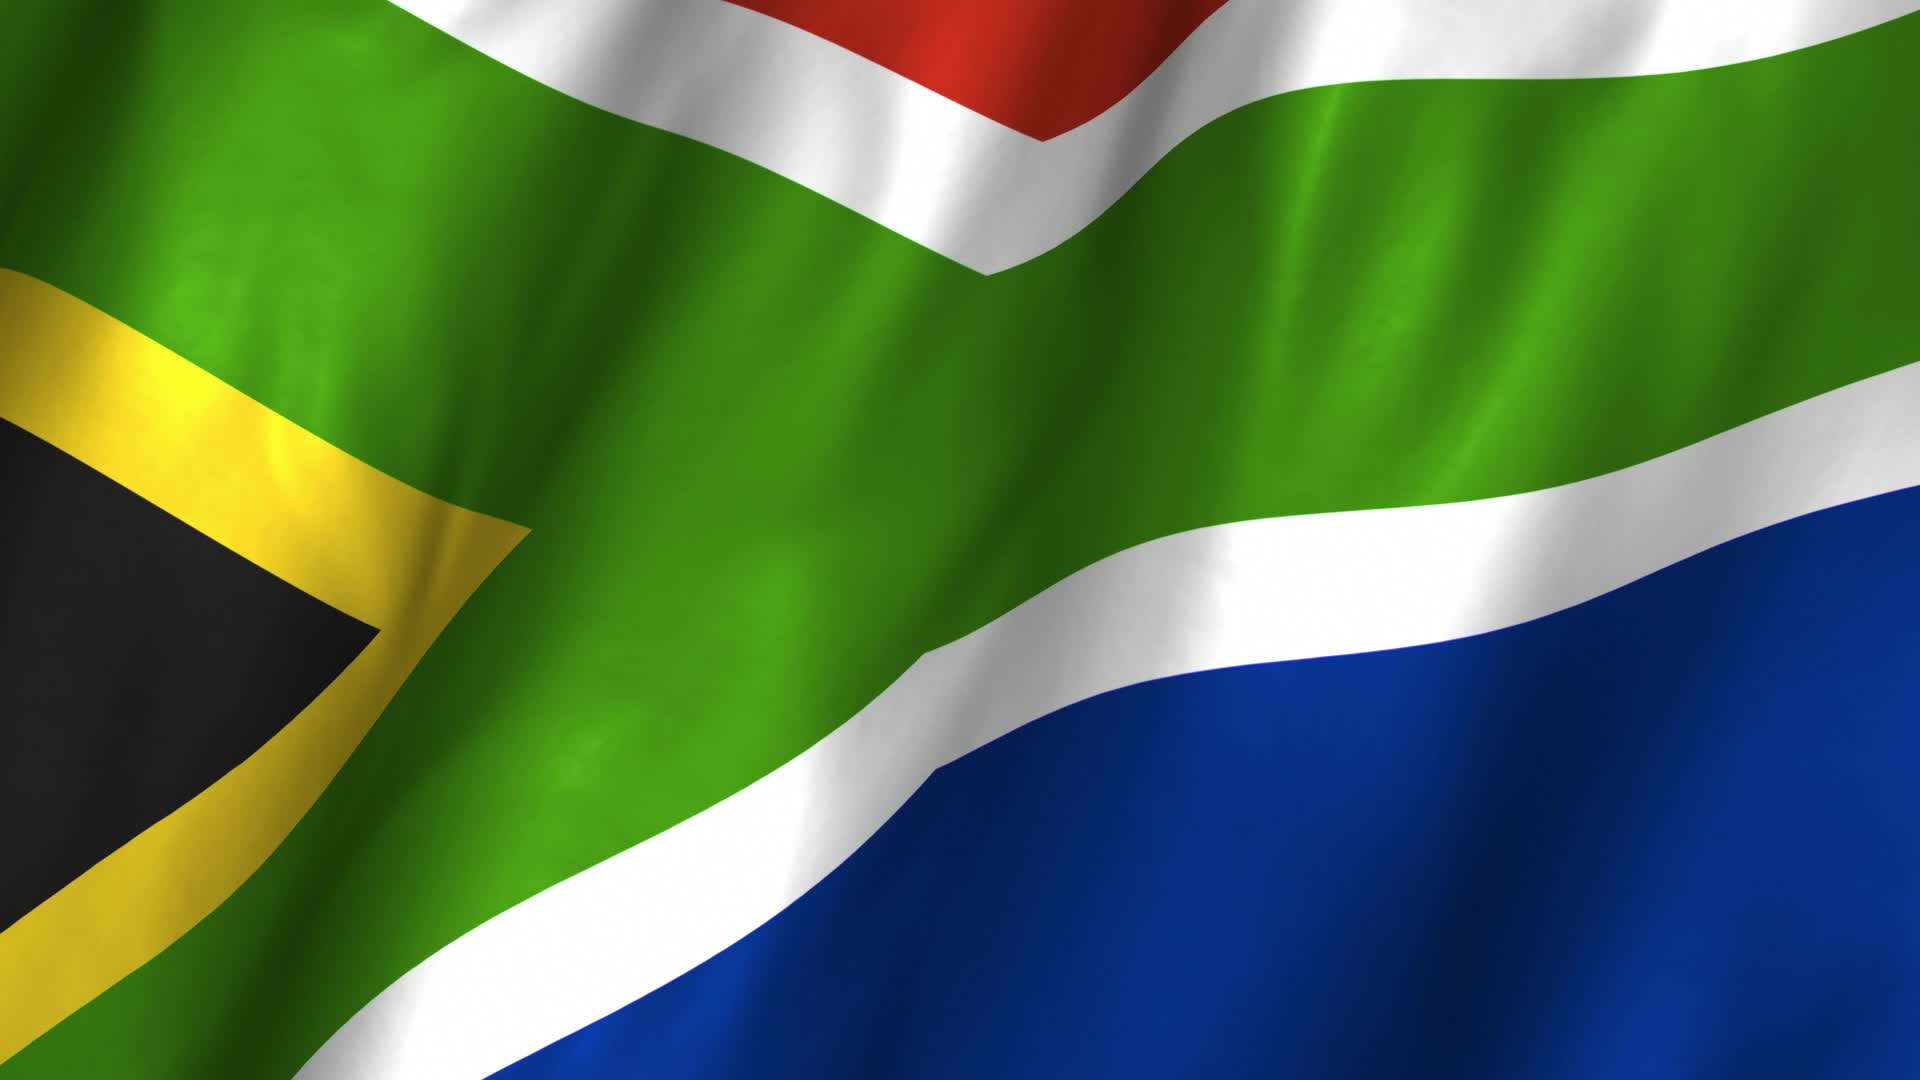 компания құру Оңтүстік Африка компаниясы құру Оңтүстік Африка компаниясы құру fidulink Оңтүстік Африка компаниясы